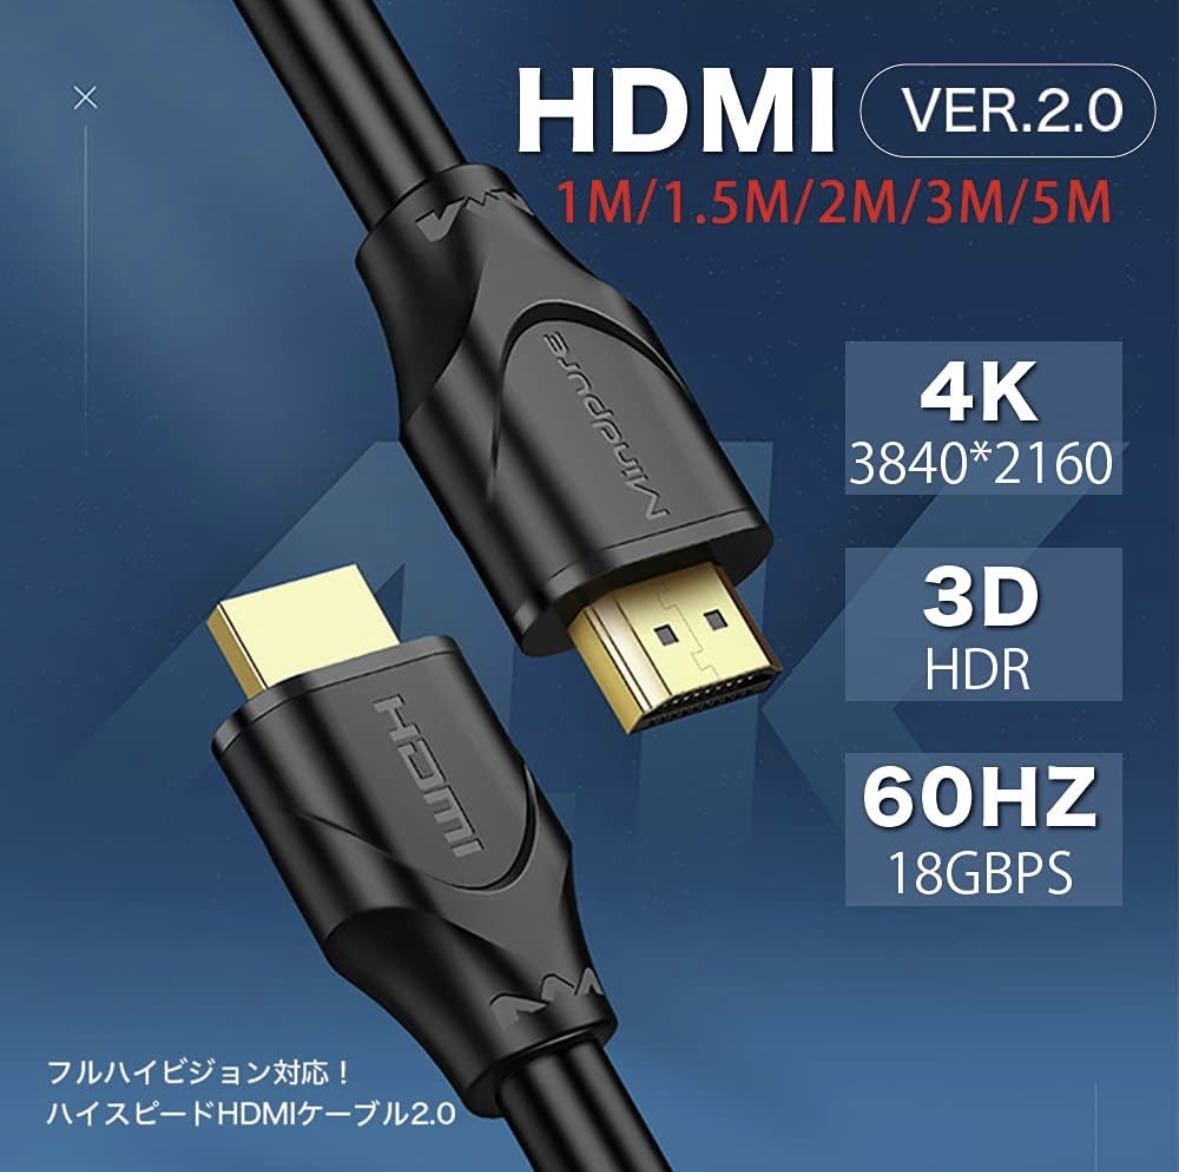 HDMIケーブル 1.5M 4K/60Hz 3D Ver.2.0b パソコン モニター 接続ケーブル カメラ Nintendo Switch スイッチ PS3 PS4 対応 (1.5M)_画像2